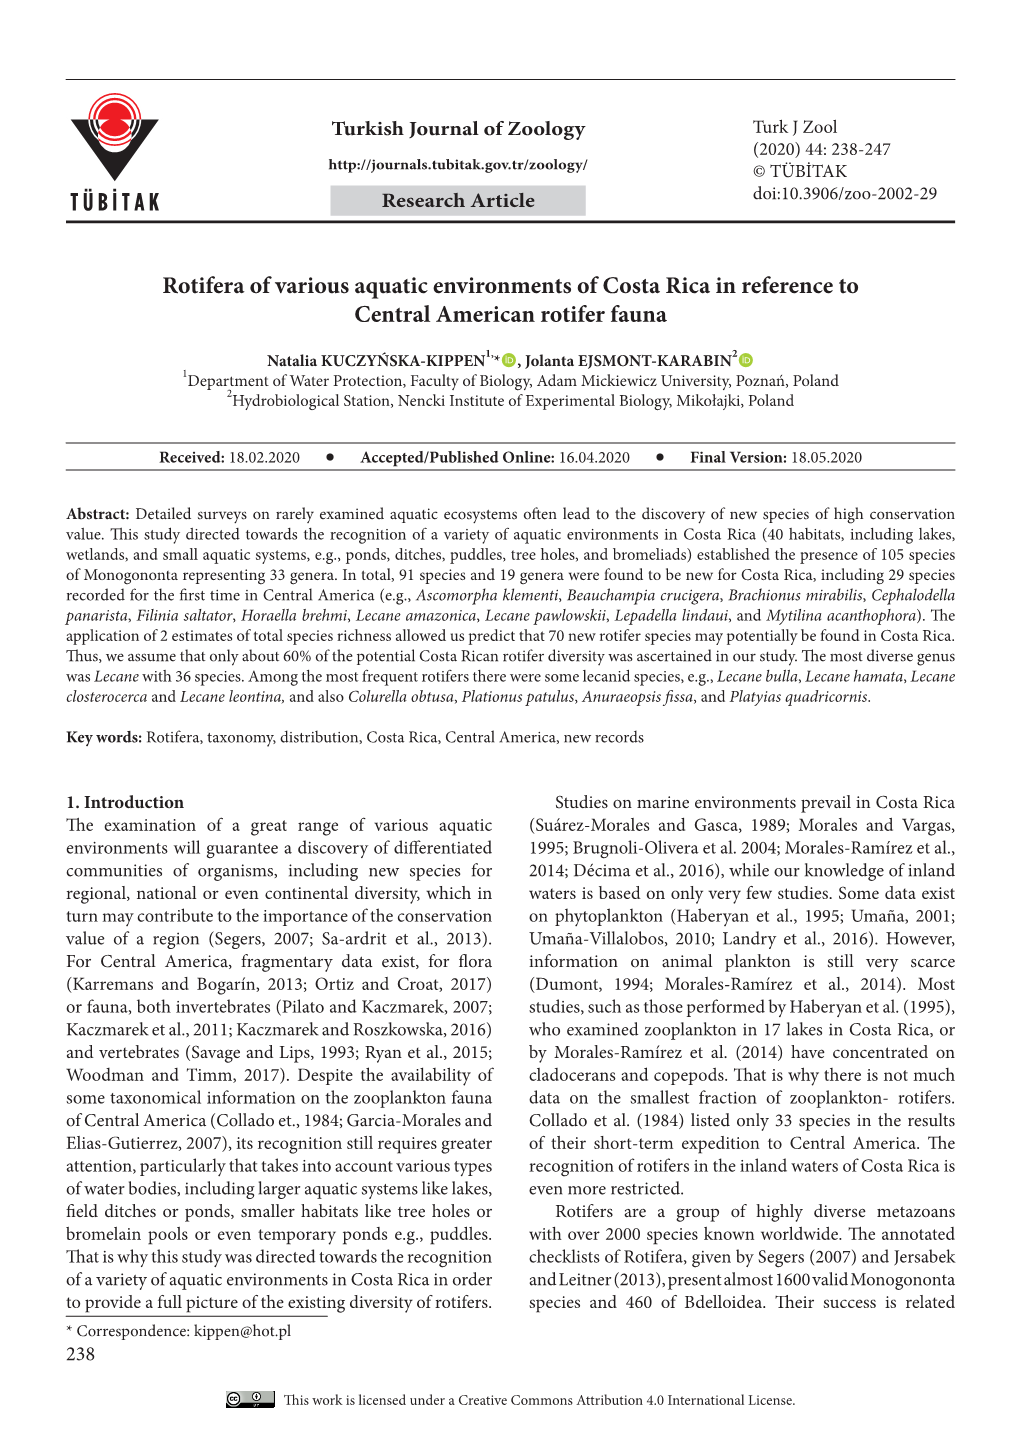 Rotifera of Various Aquatic Environments of Costa Rica in Reference to Central American Rotifer Fauna